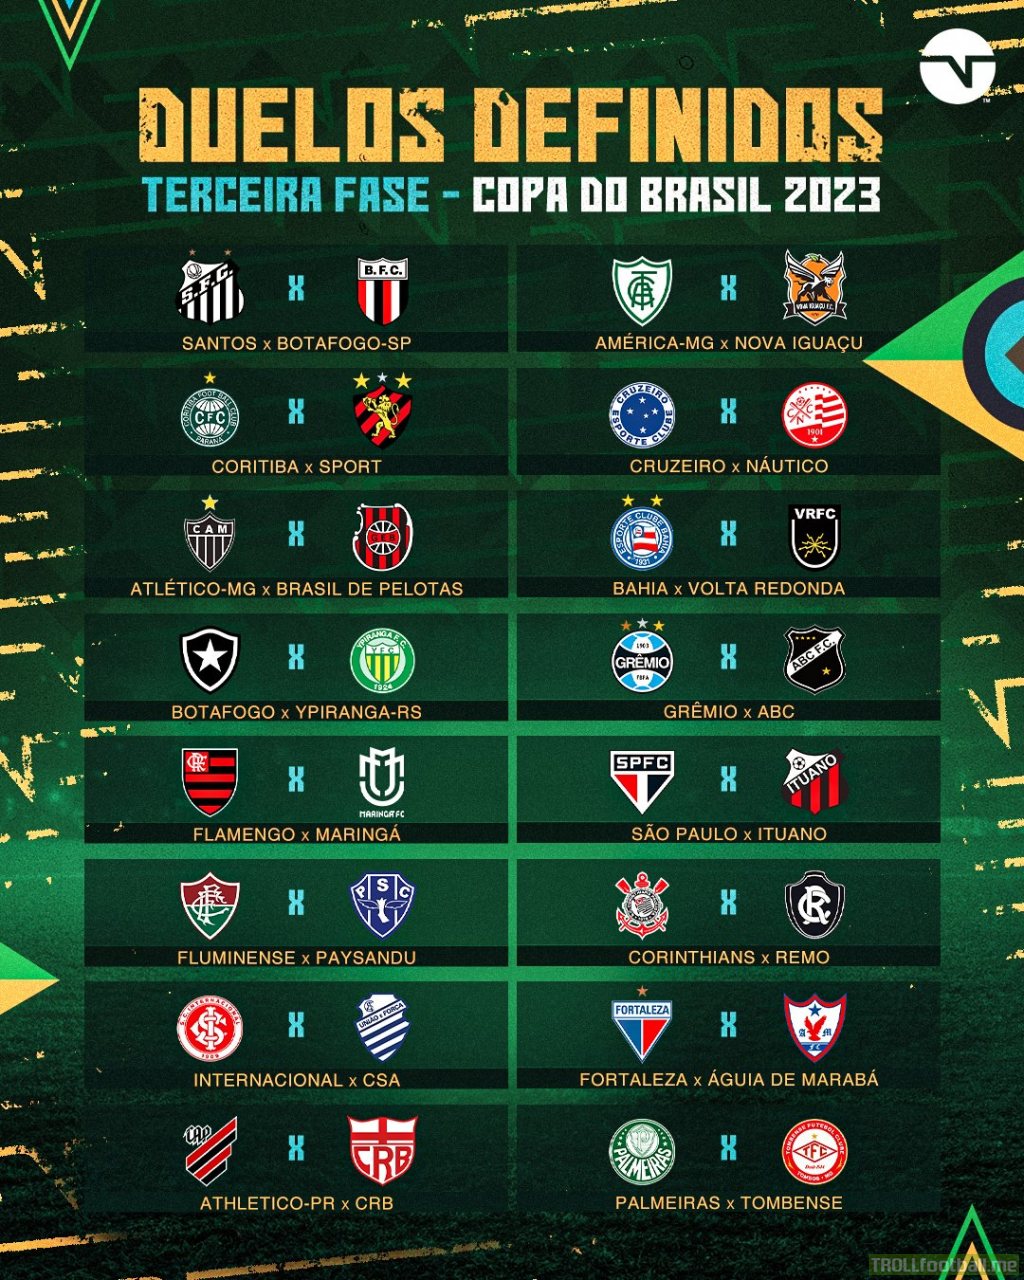 Copa do Brasil third round draw results